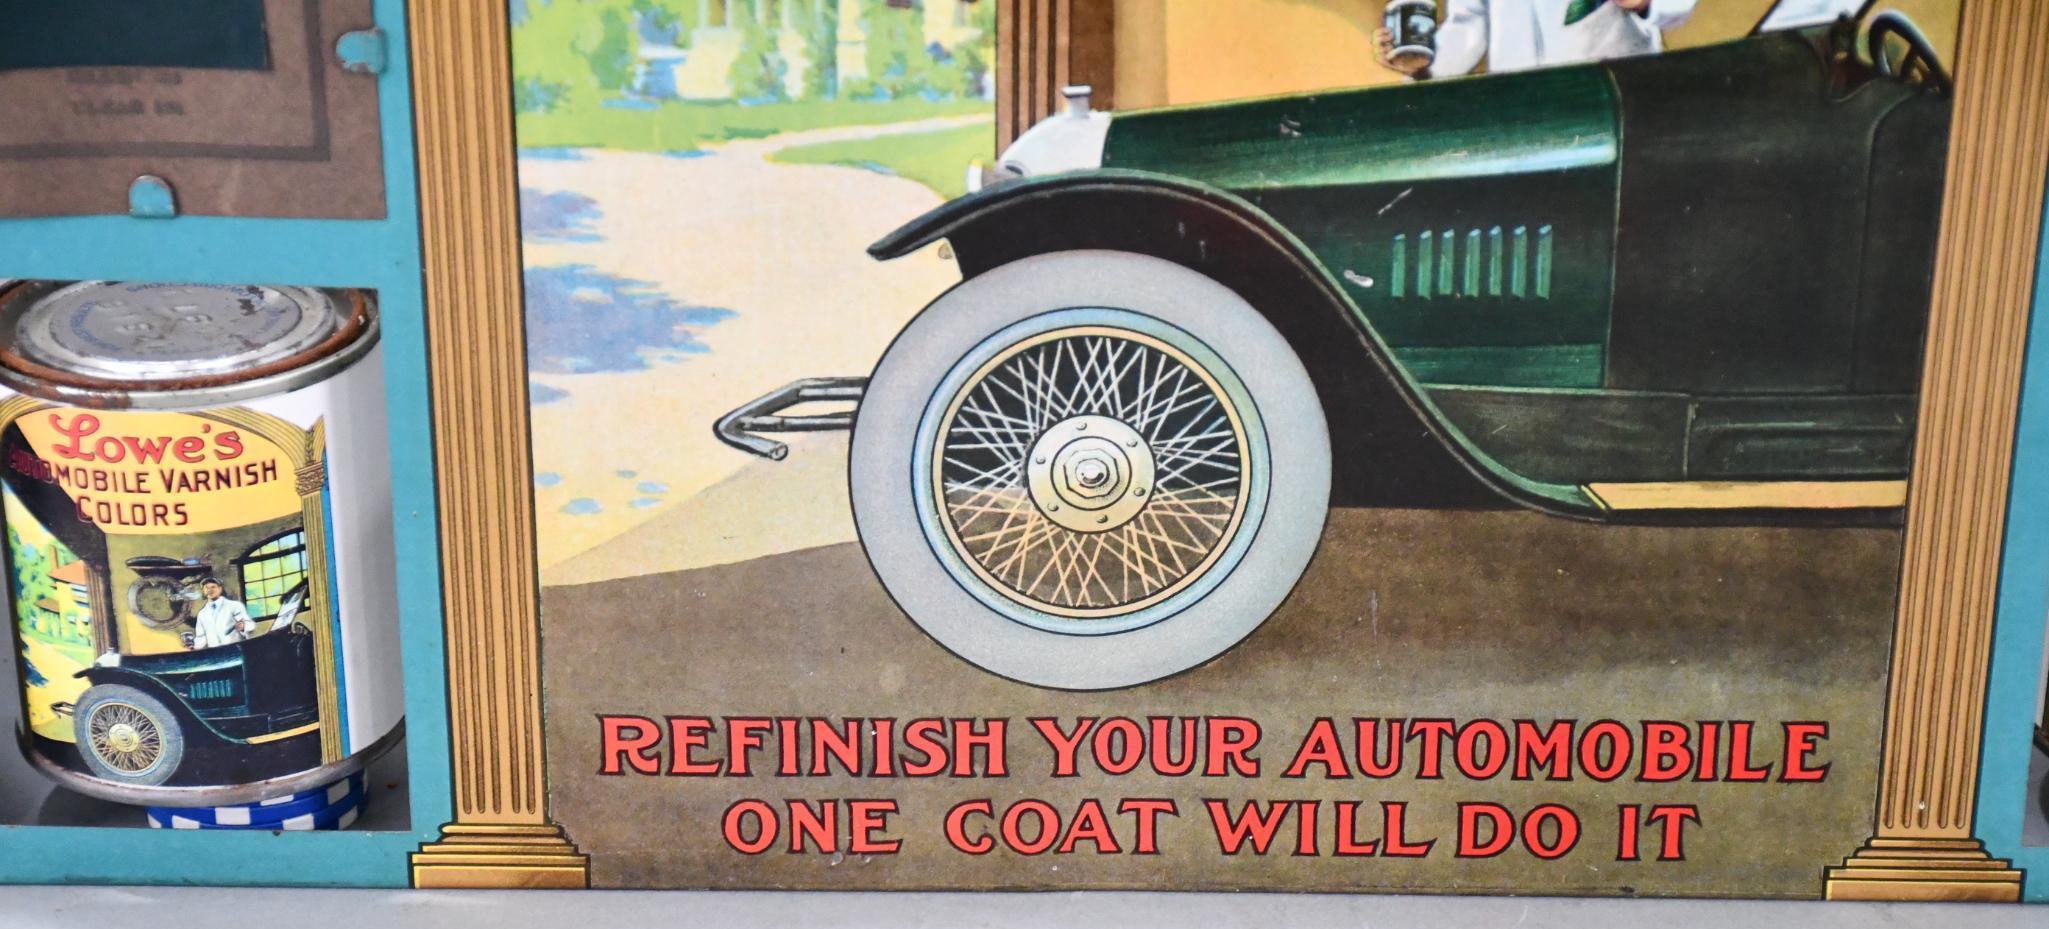 Lowe's Automobile Varnish Color Metal Display with Image